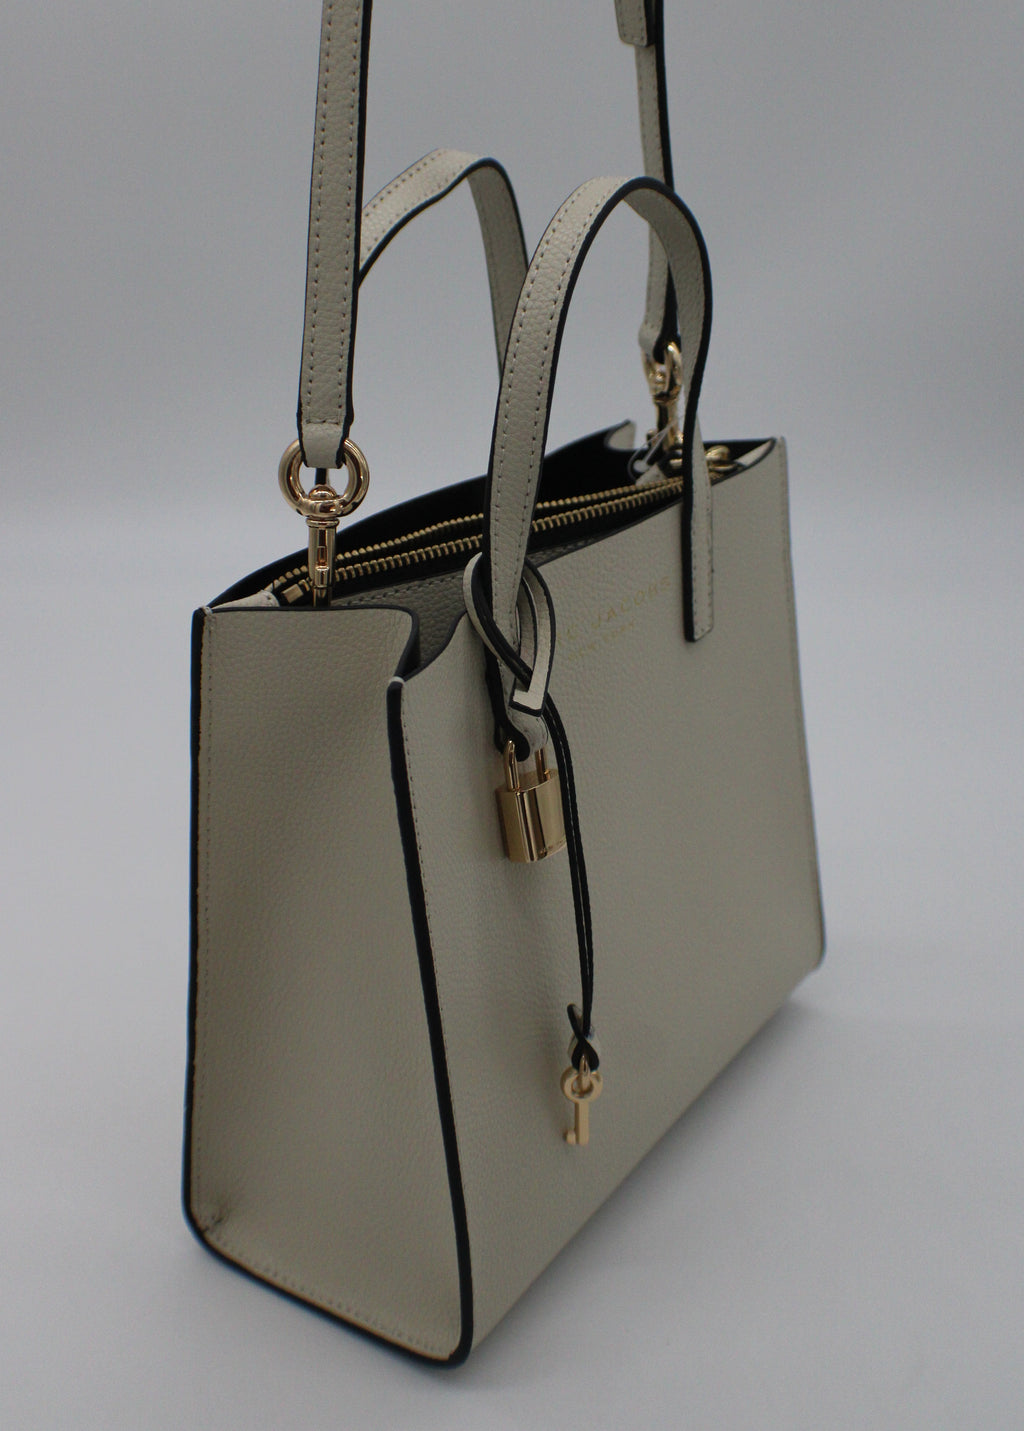 Cross body bags Marc Jacobs - The Mini Grind black bag - M0013268065